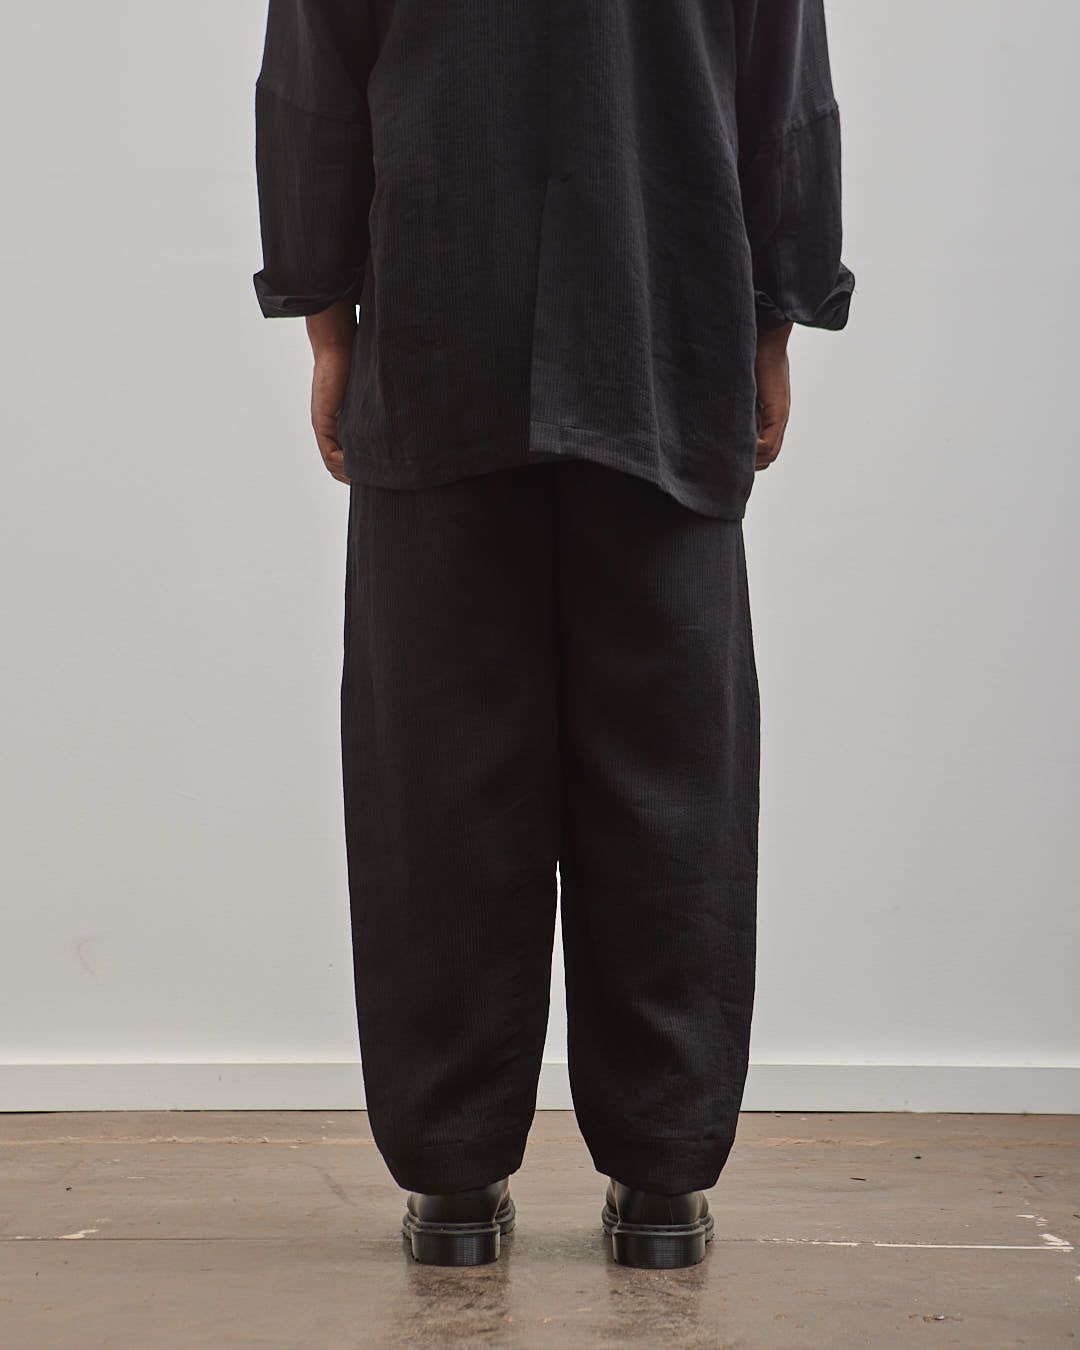 Jan-Jan Van Essche Pleated Trousers #68, Black Linen